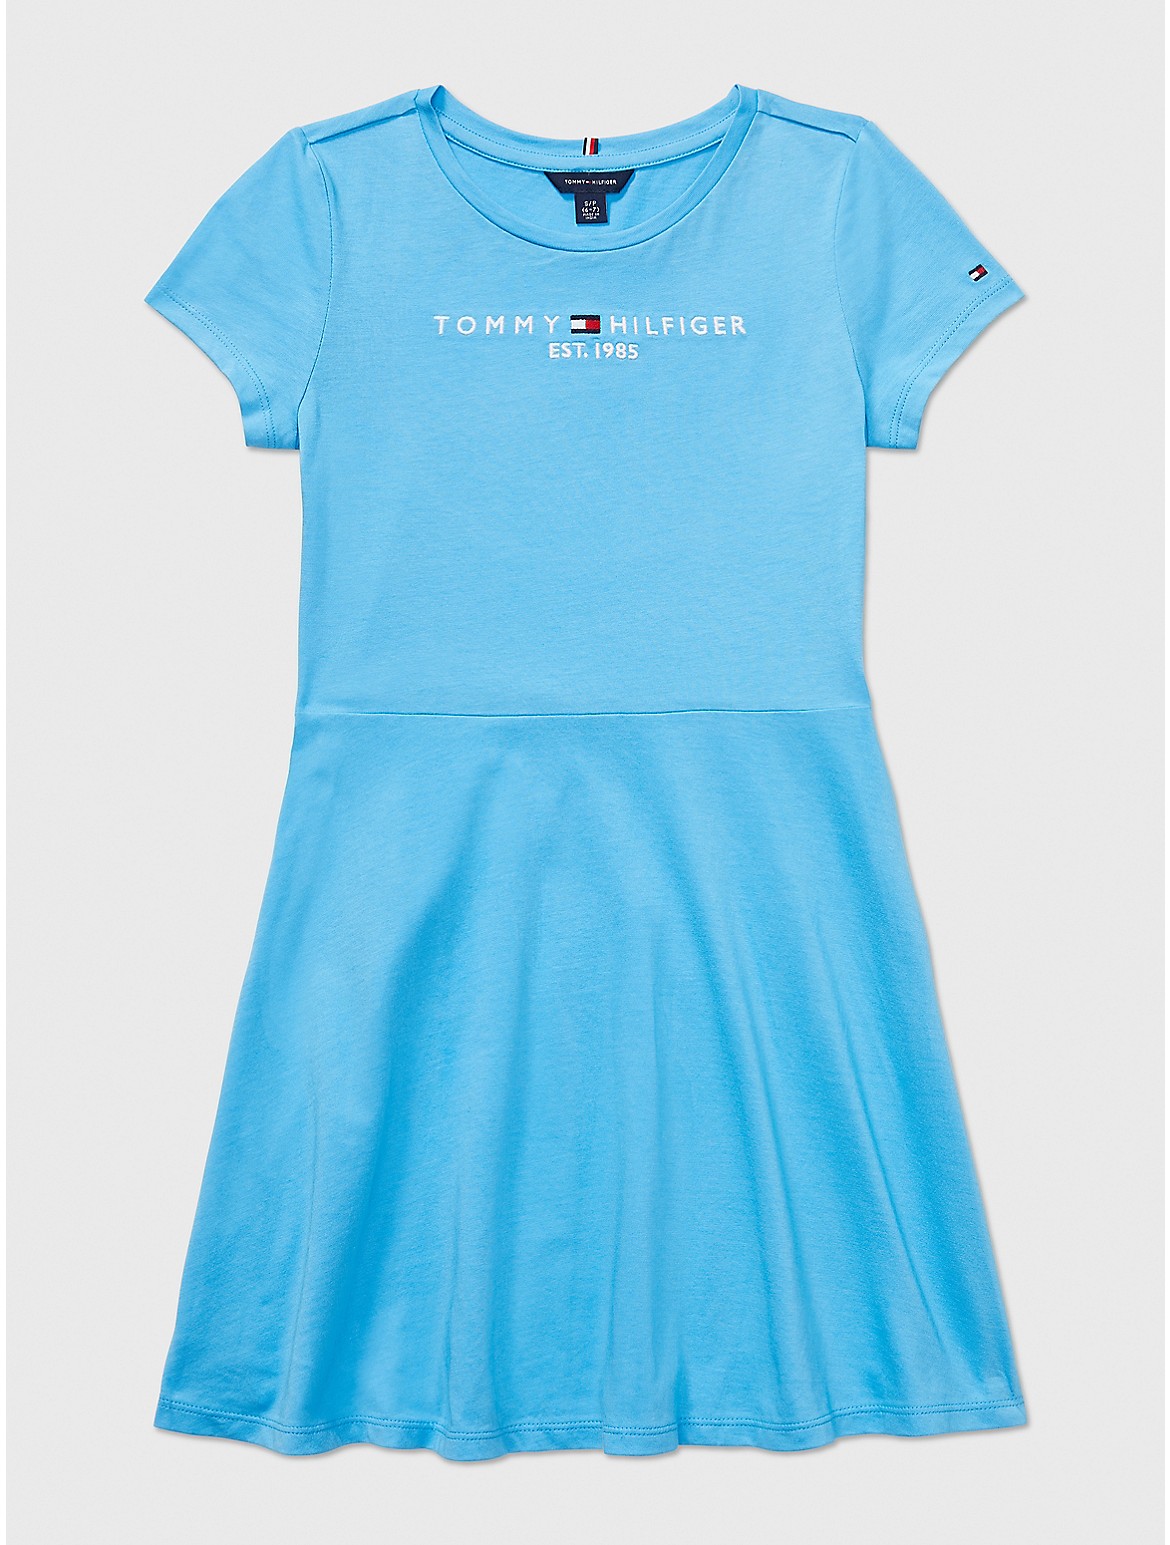 Tommy Hilfiger Girls' Kids' Seated Fit Signature Skater Dress